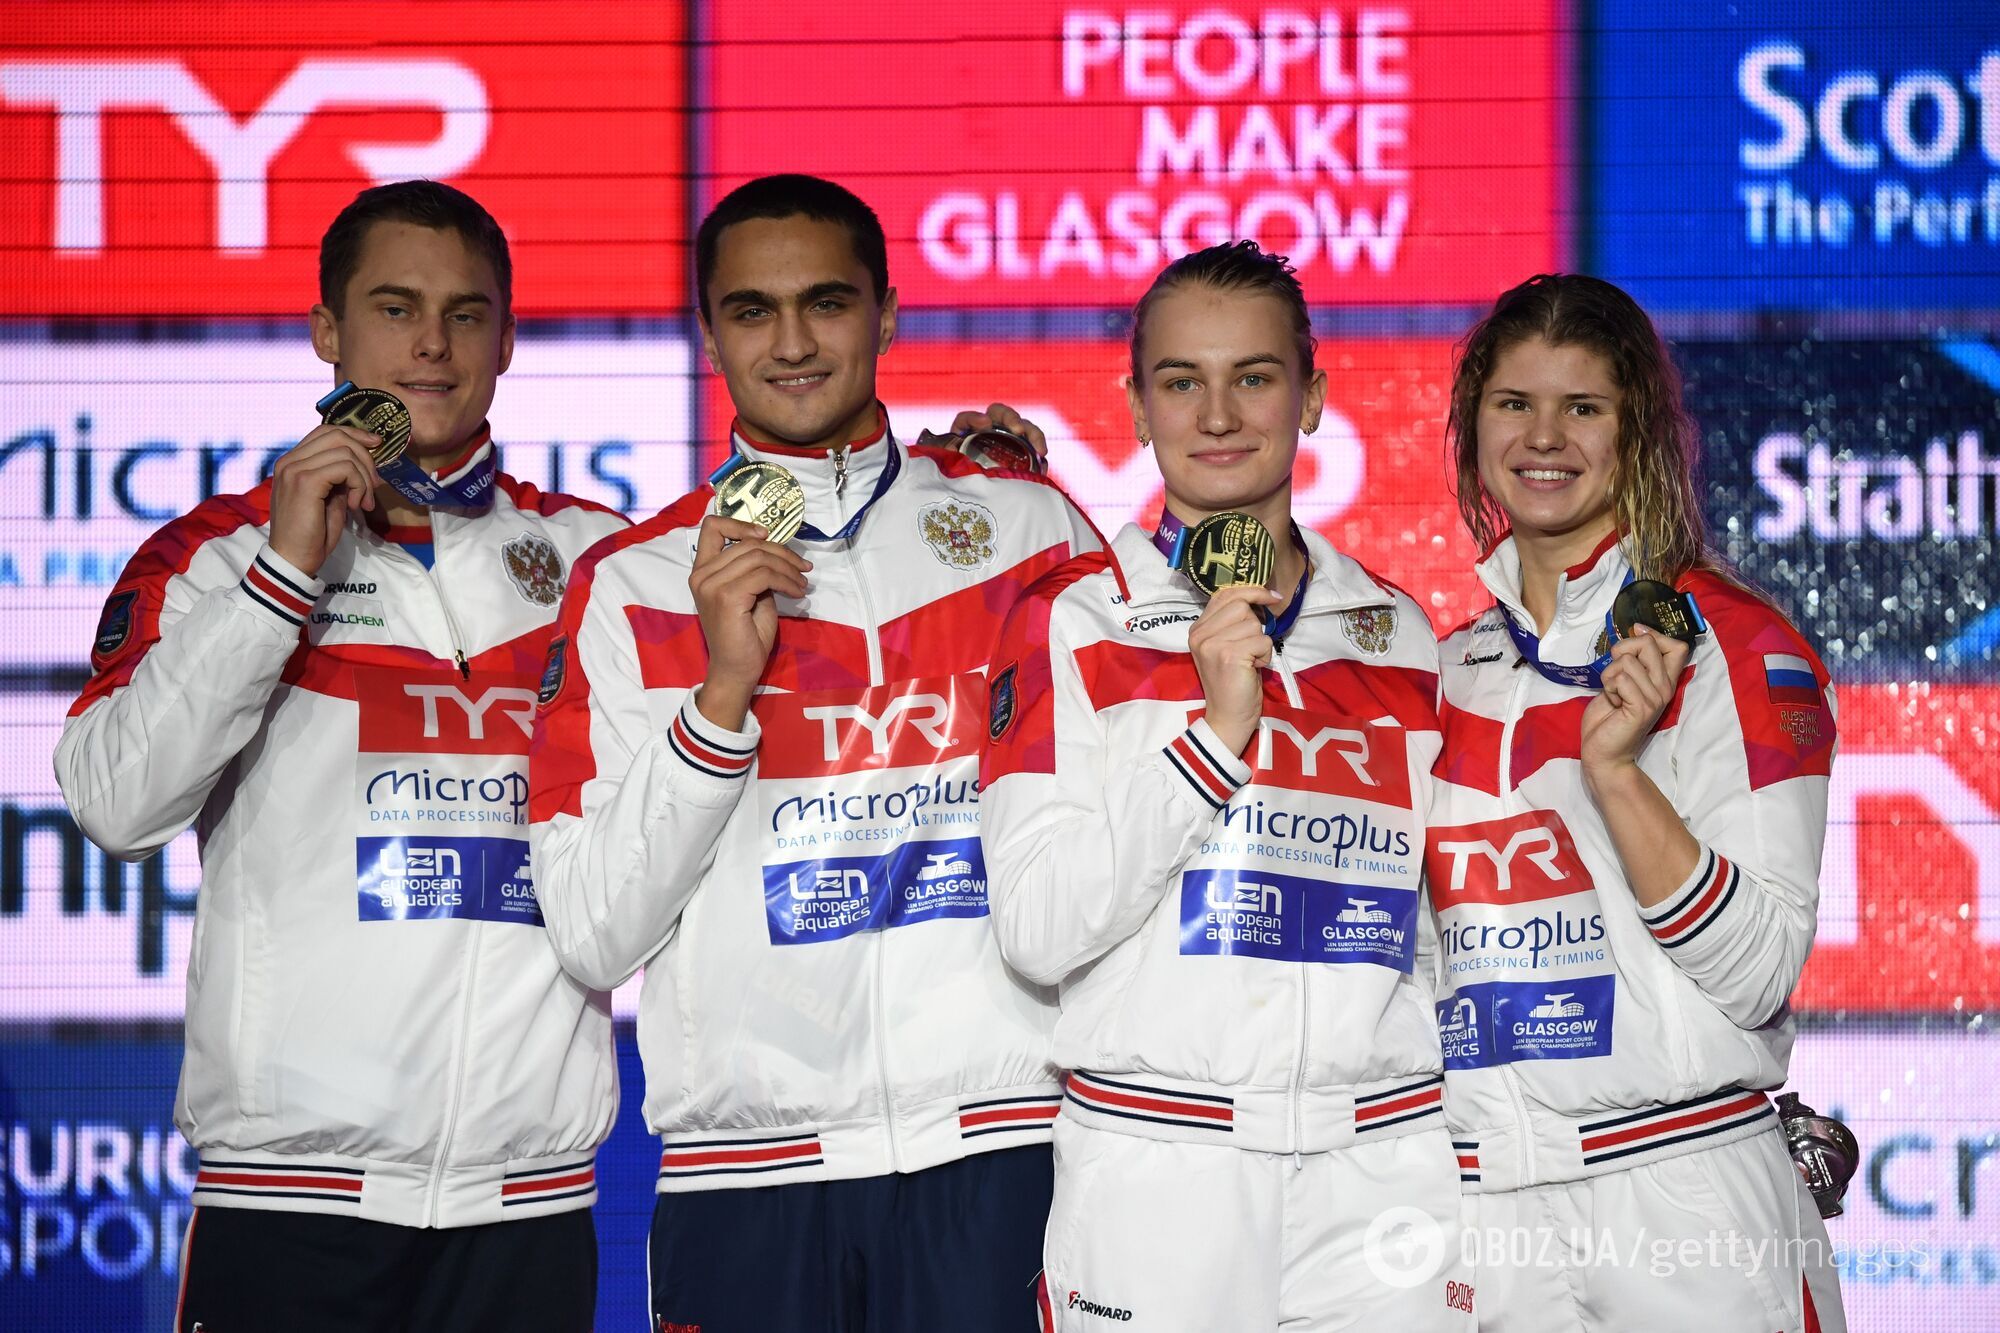 Слева направо: Морозов, Гринев, Сурикова, Каменева (фото с соревнований 2019 года)